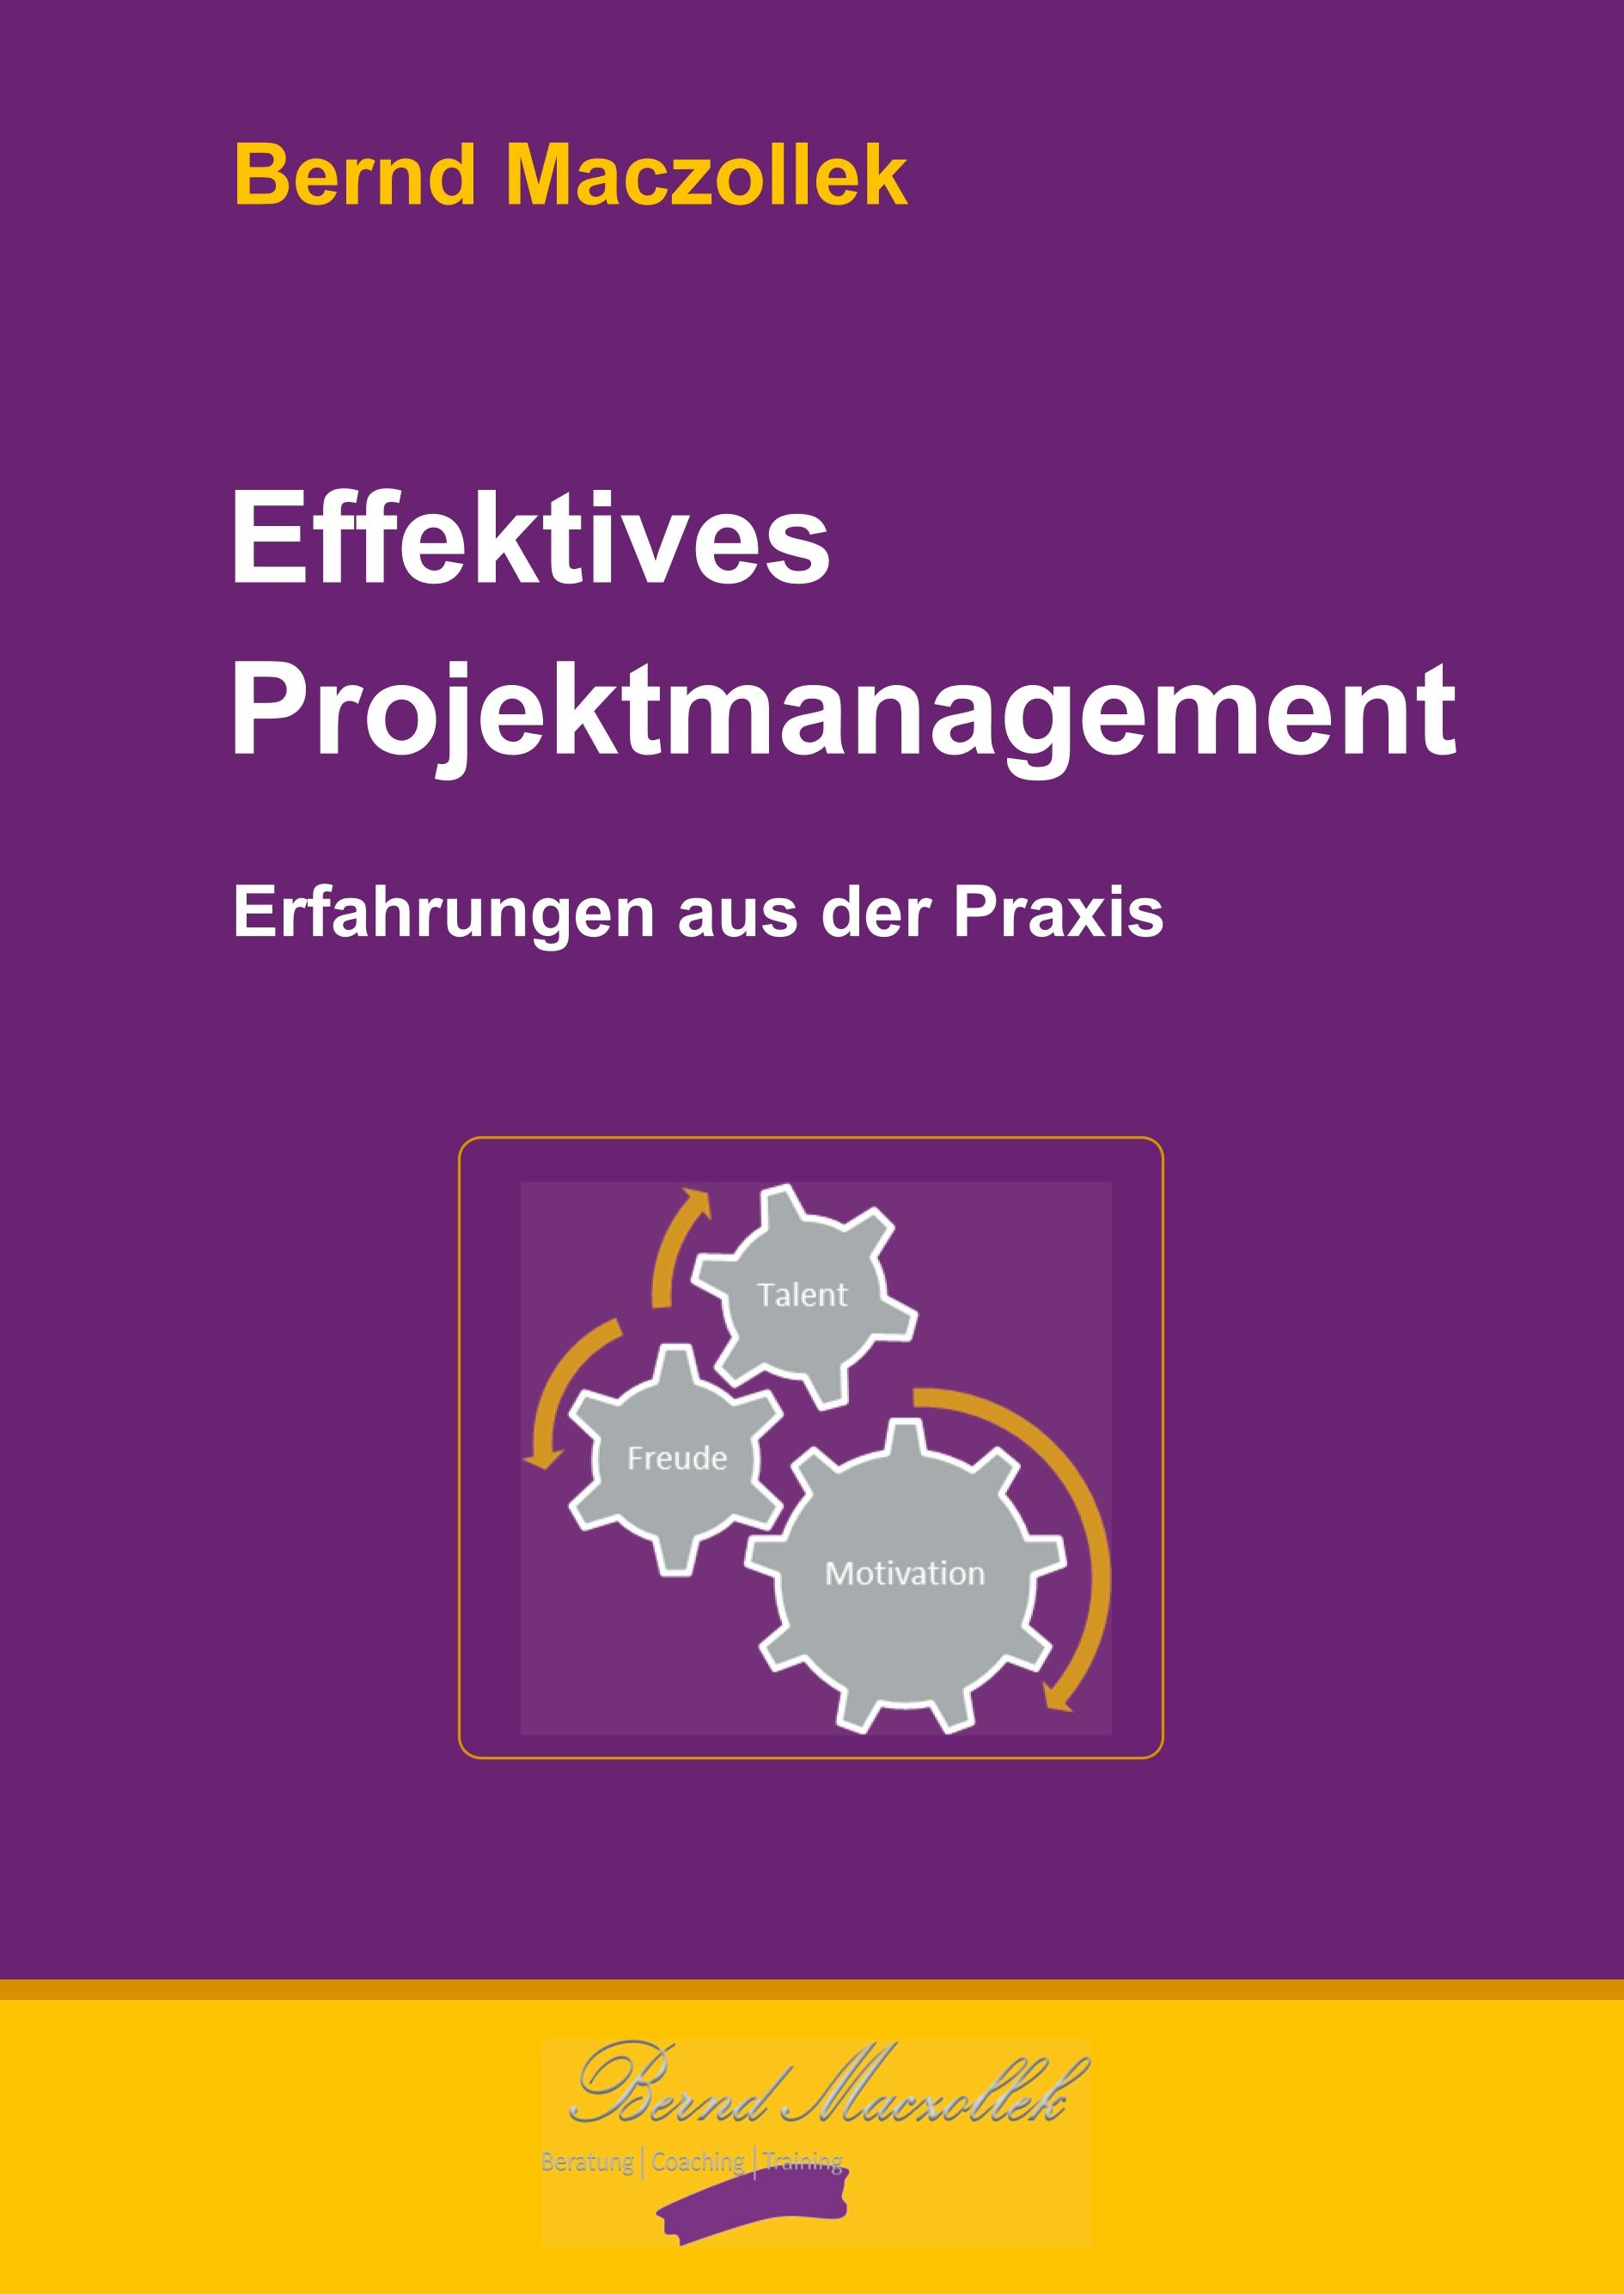 Effektives Projektmanagement - Bernd Maczollek